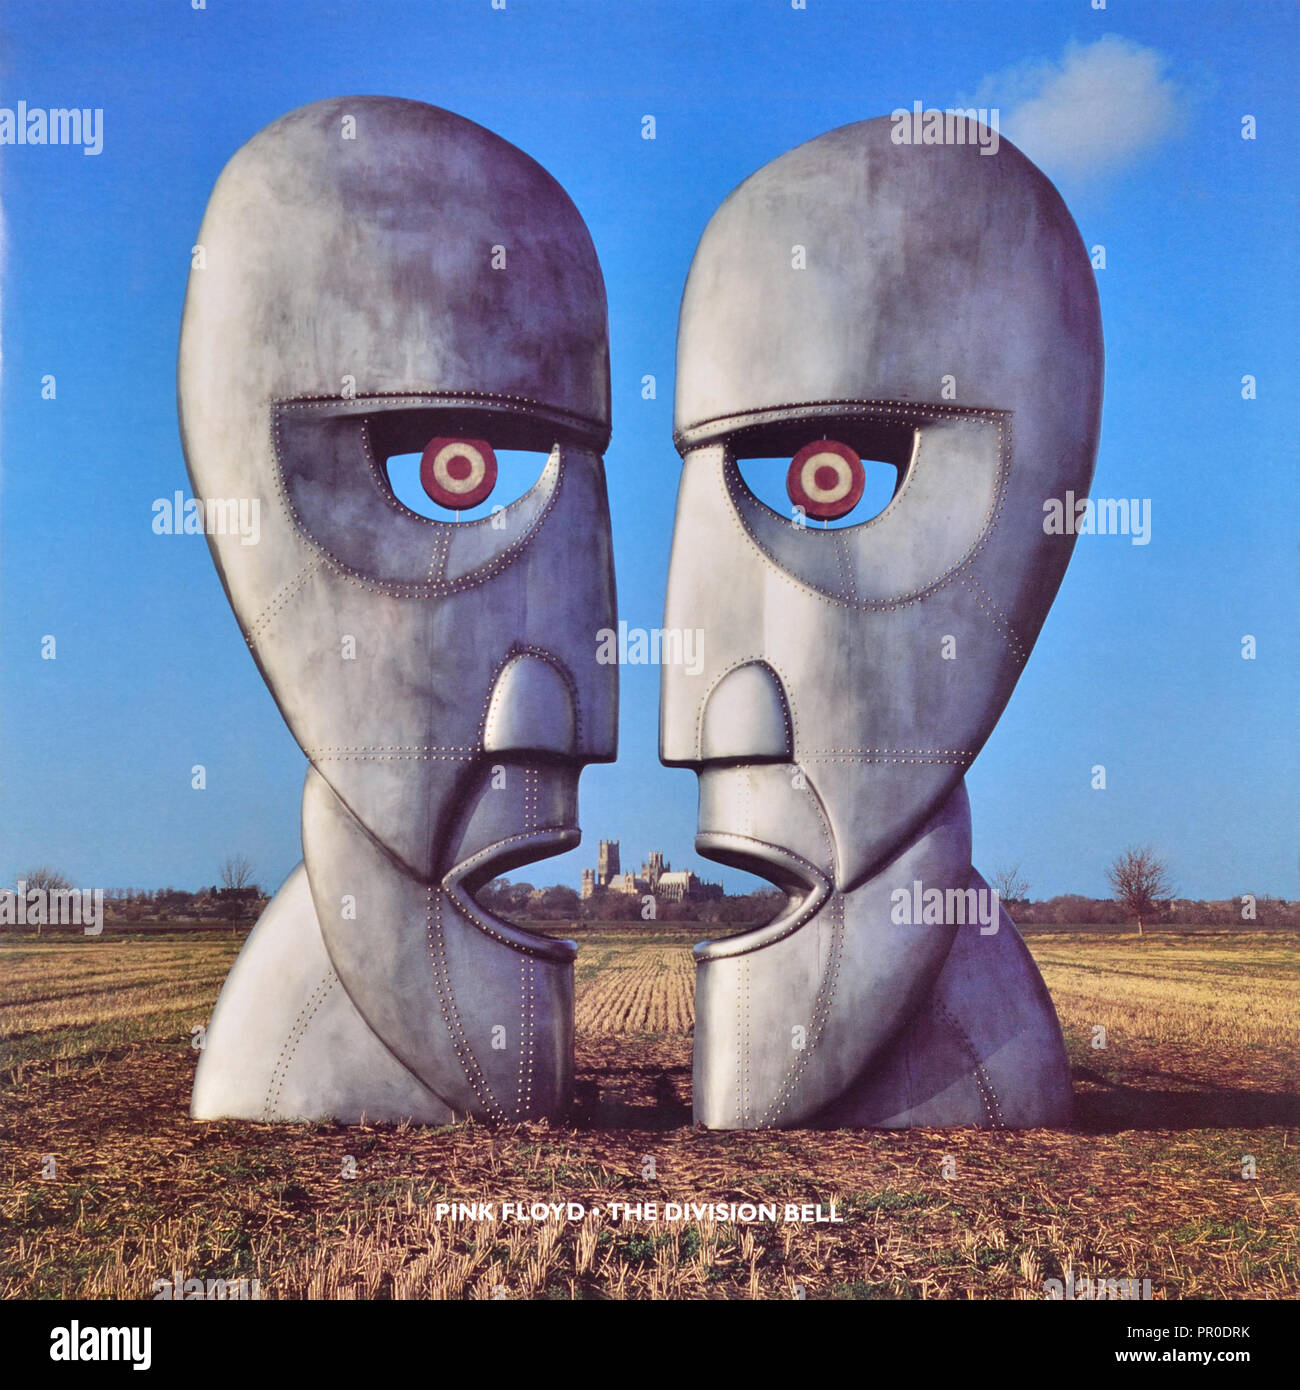 Pink Floyd - original vinyl album cover - The division bell - 1994 Stock Photo